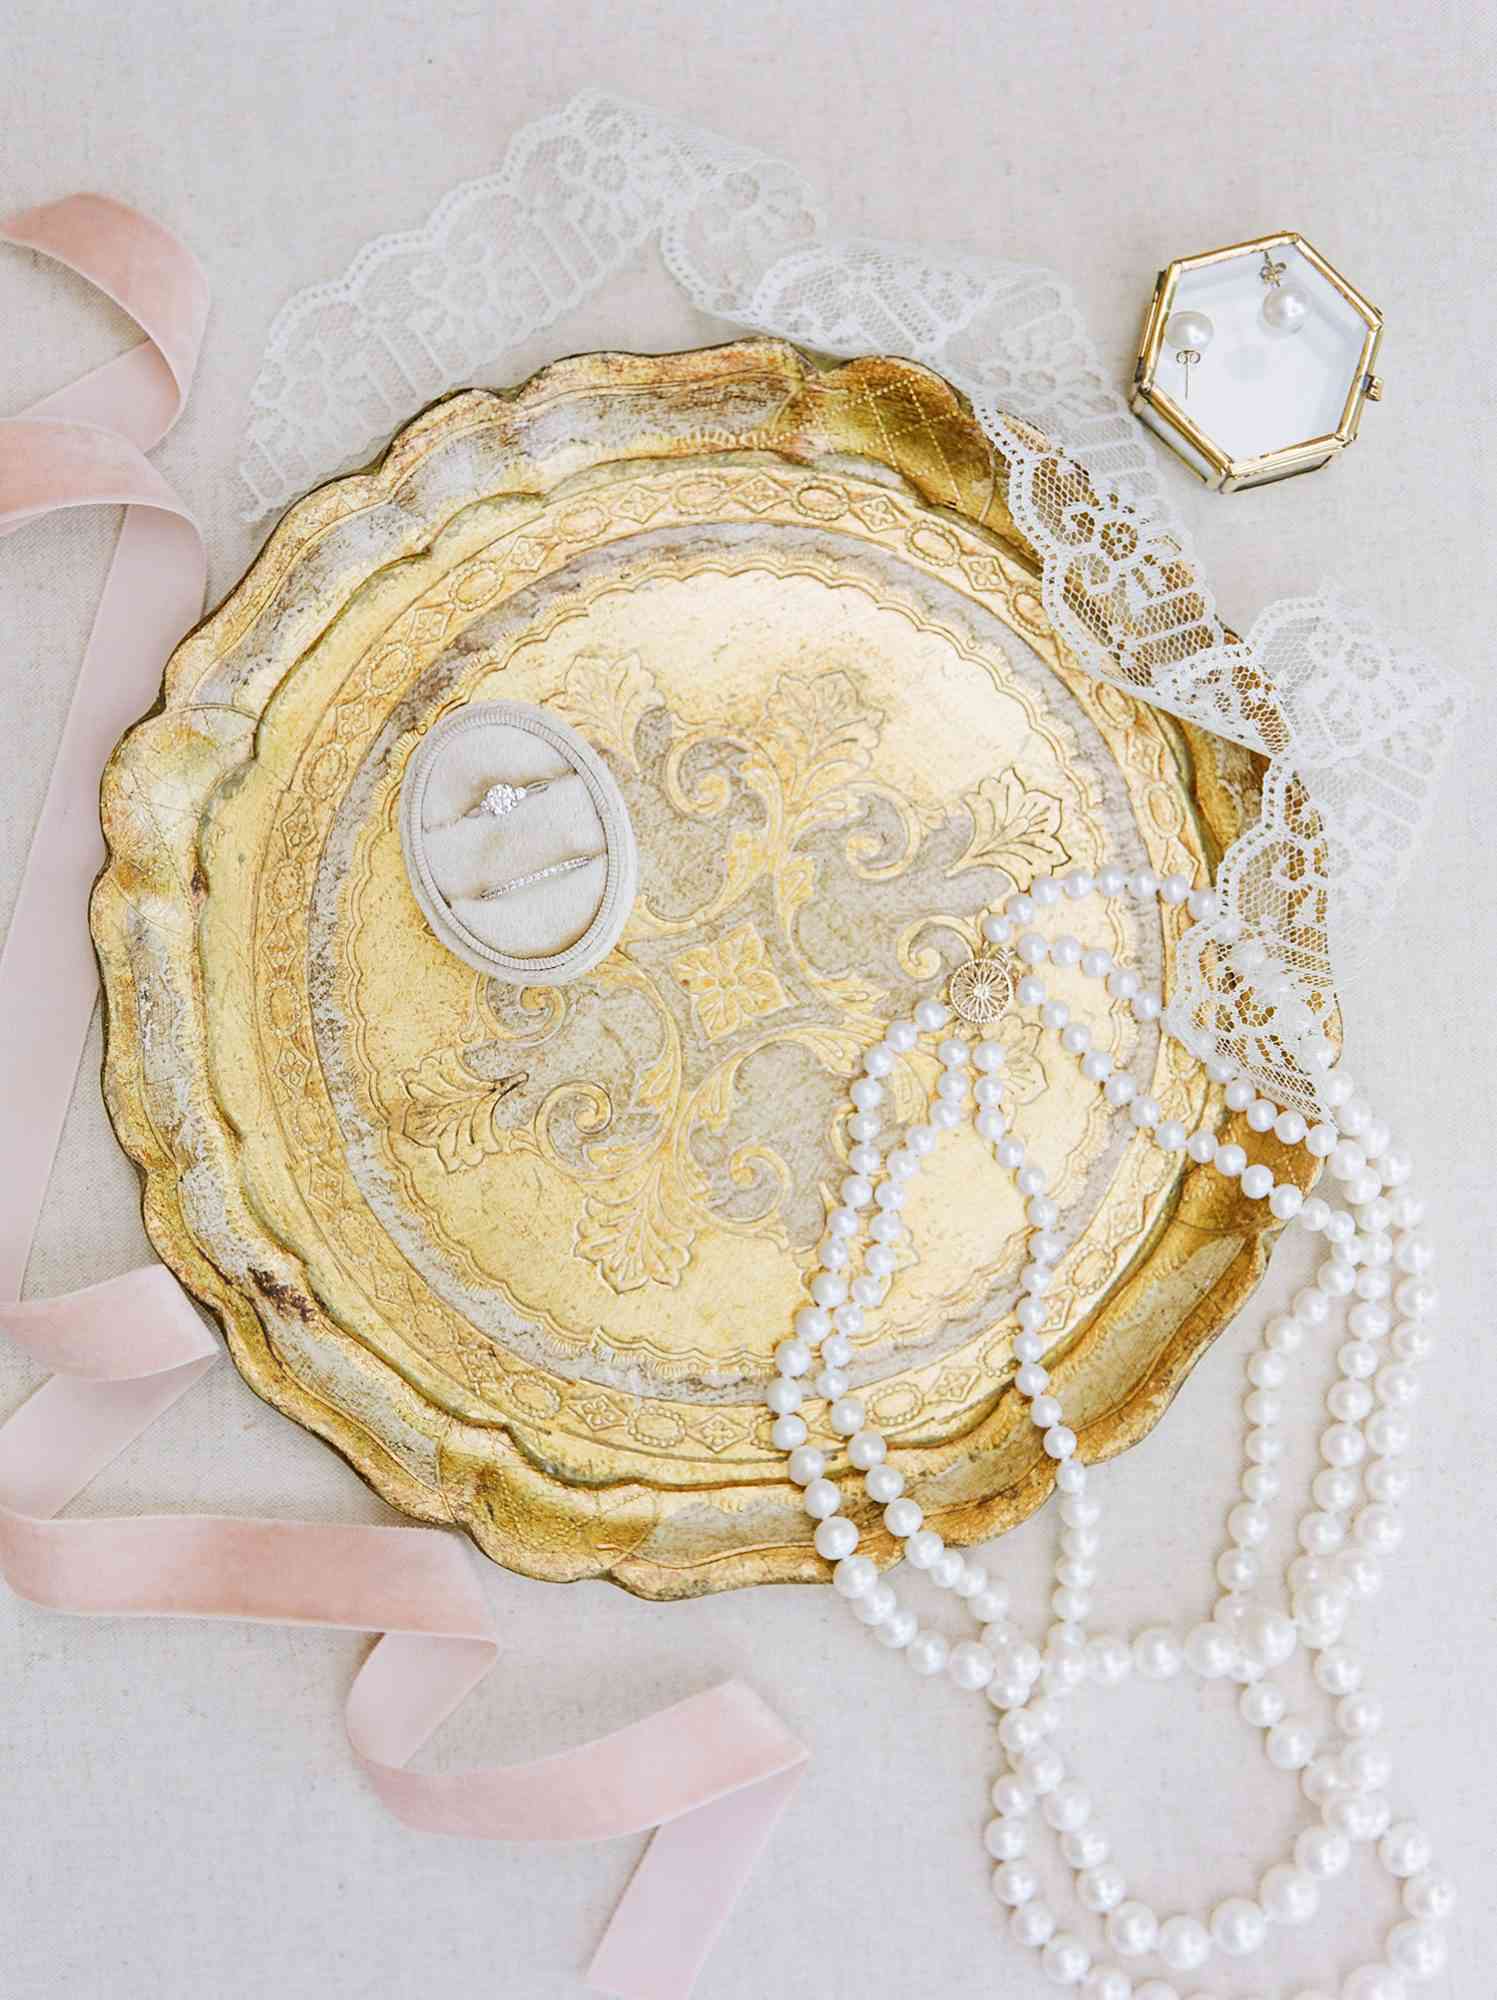 anwuli patrick wedding jewelry on gold plate